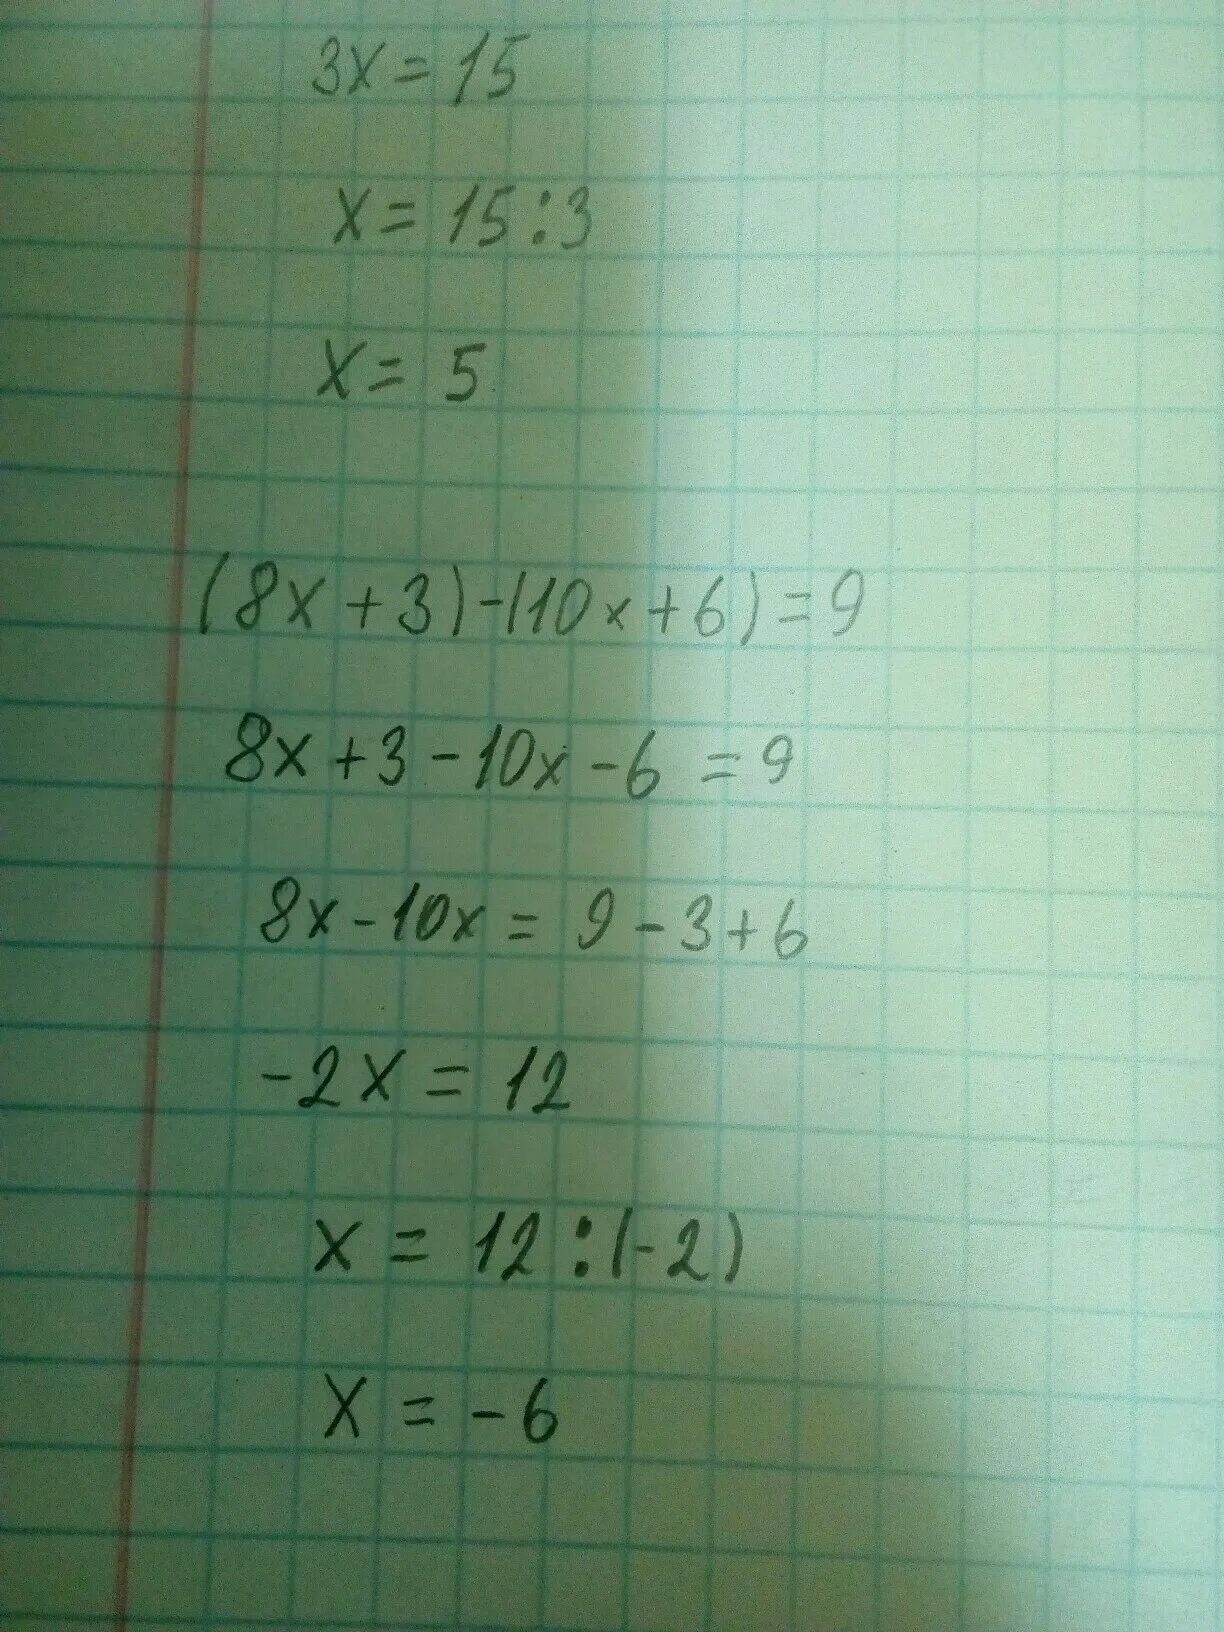 6x 12 5x 10. (10-X)(10+X). (8x+3)-(10x+6)=9. (2x-10)-(3x-4)=6. 4x-10=x+8 ответ.